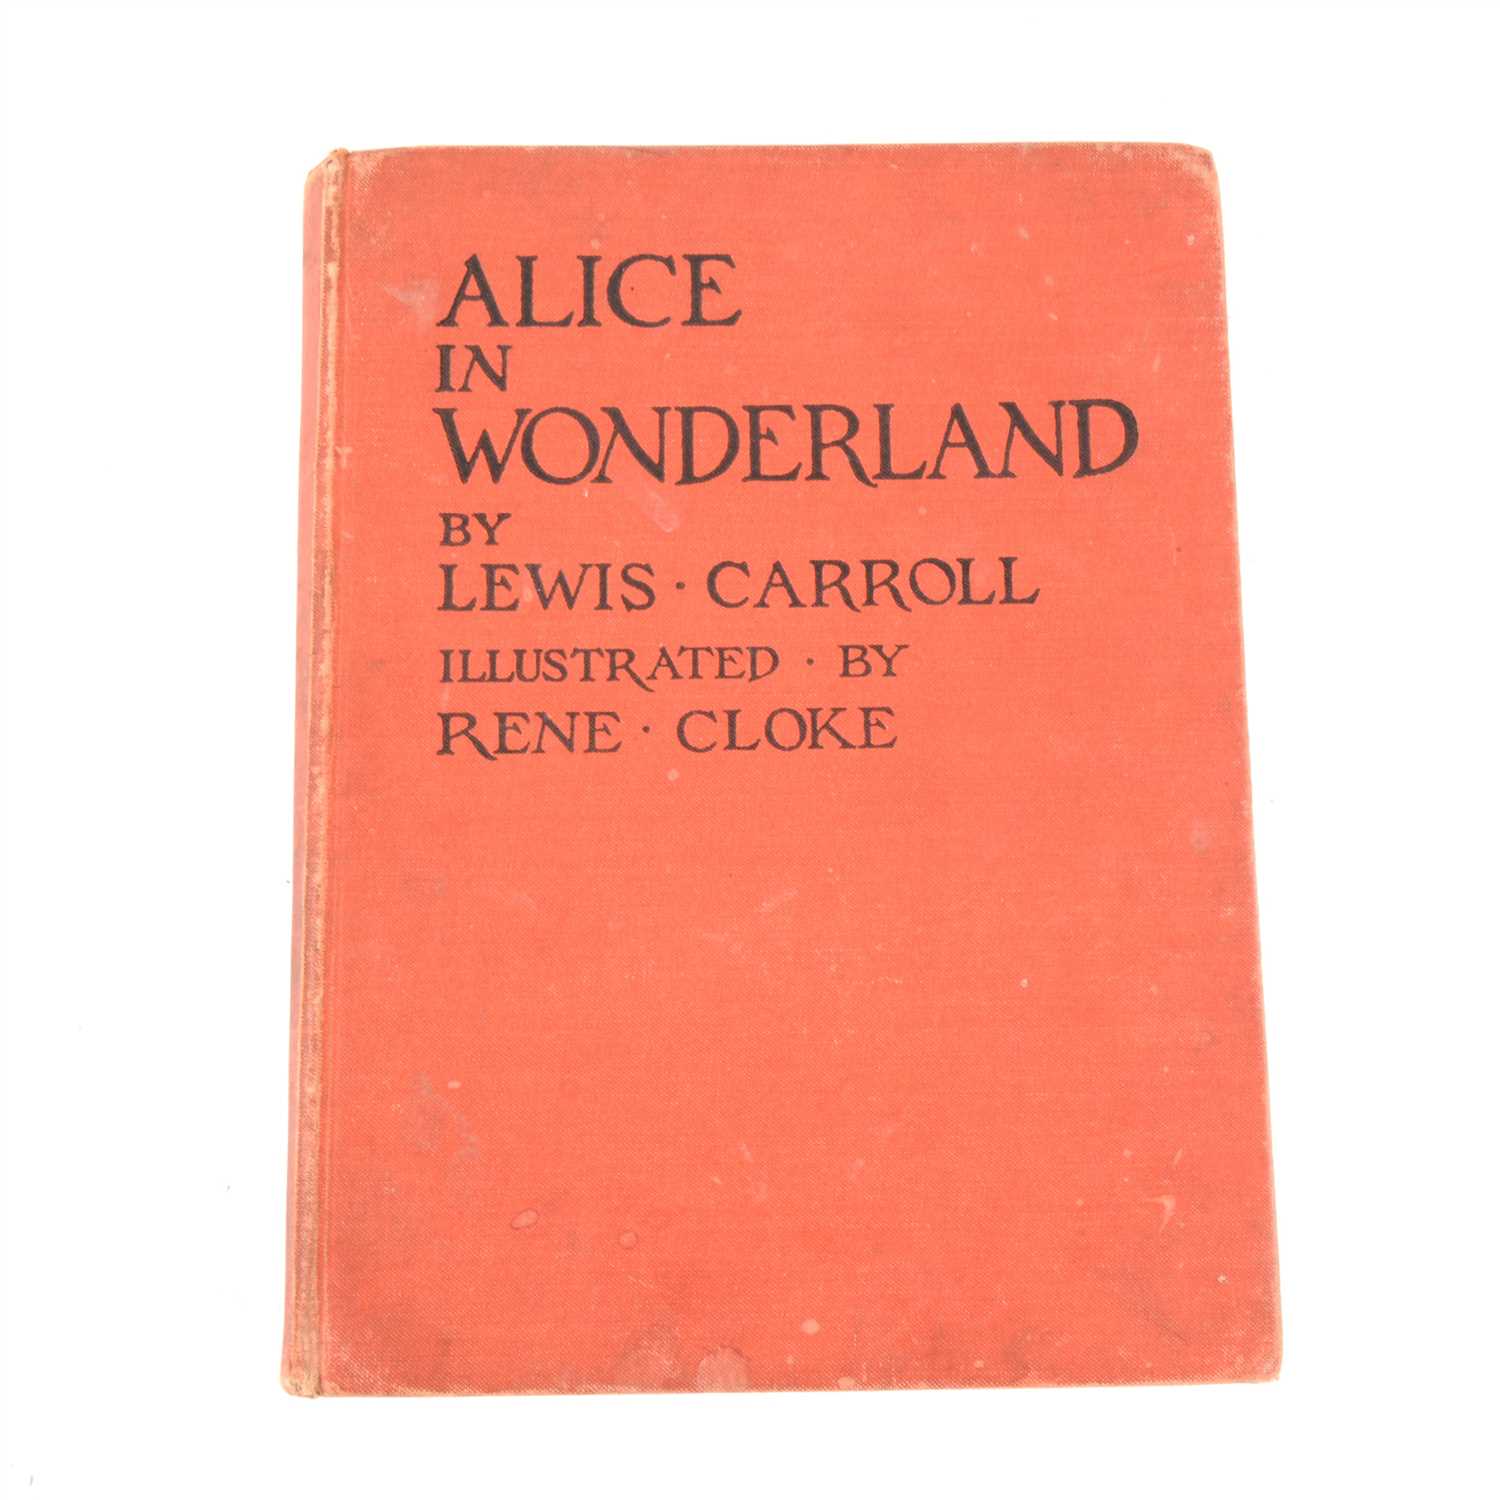 Lot 98 - Lewis Carroll, Alice in Wonderland, illustrated by Rene Cloke, P. R. Gawthorne Ltd, London.